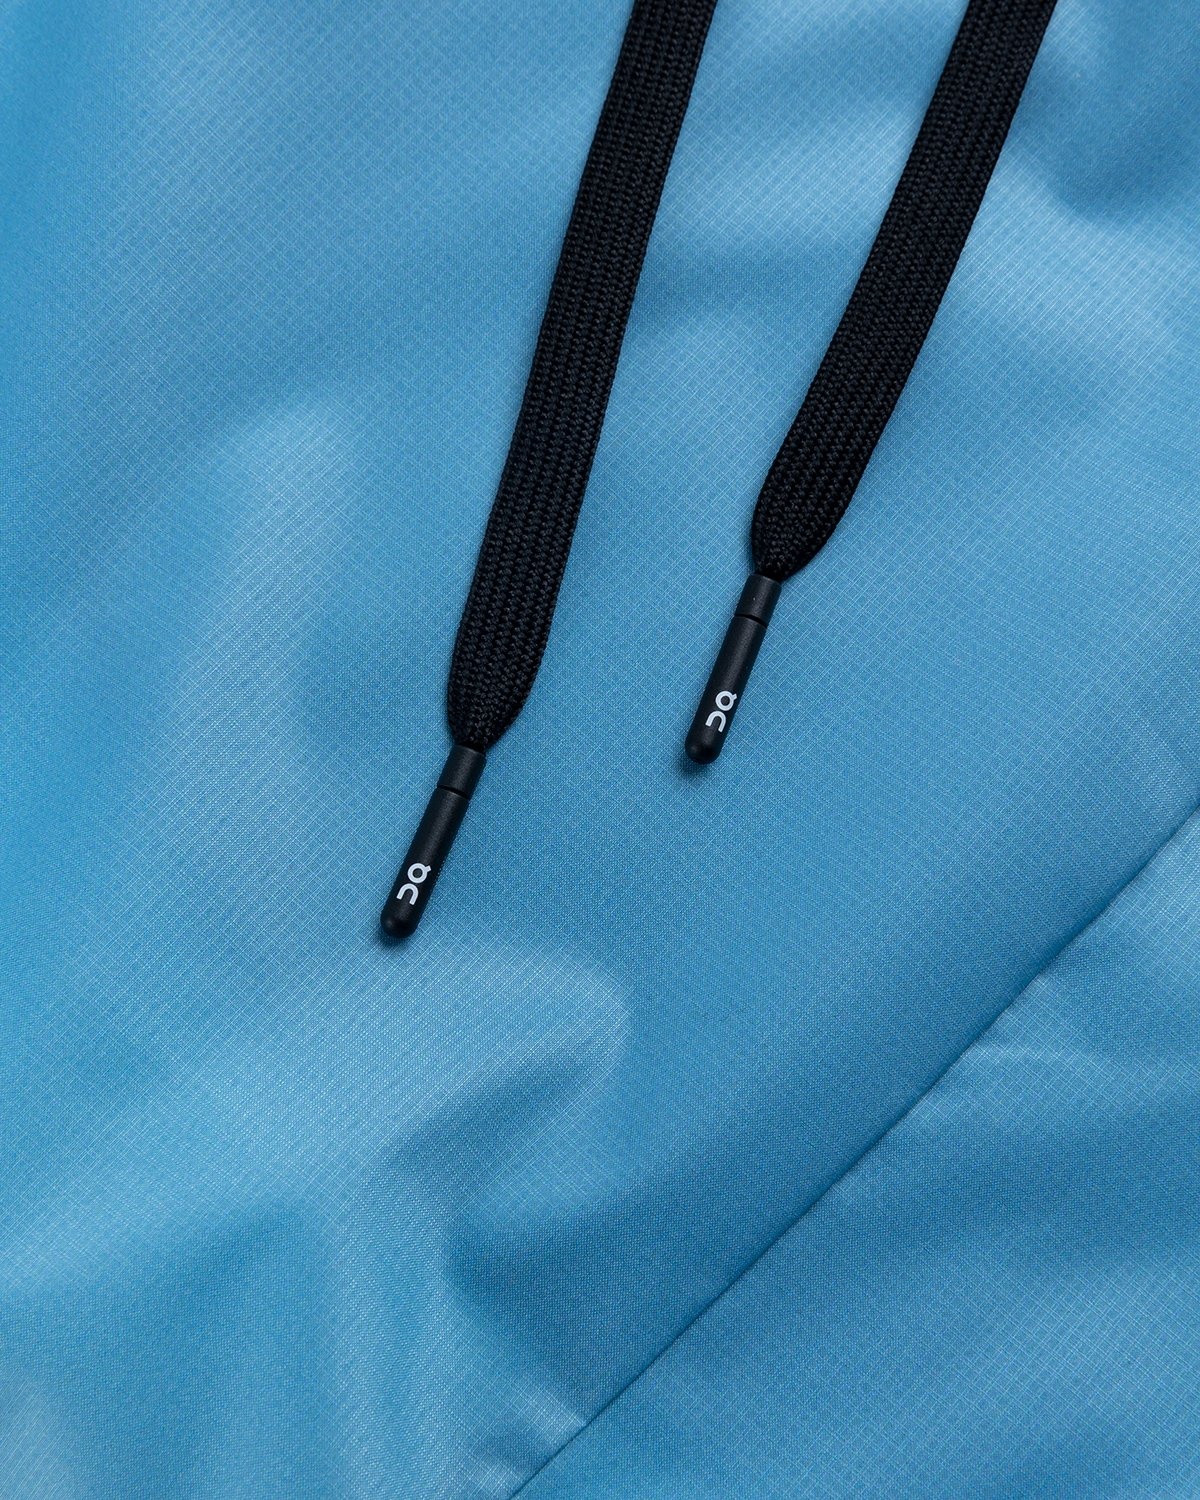 Loewe x On – Men's Technical Running Pants Gradient Grey - Active Pants - Blue - Image 6